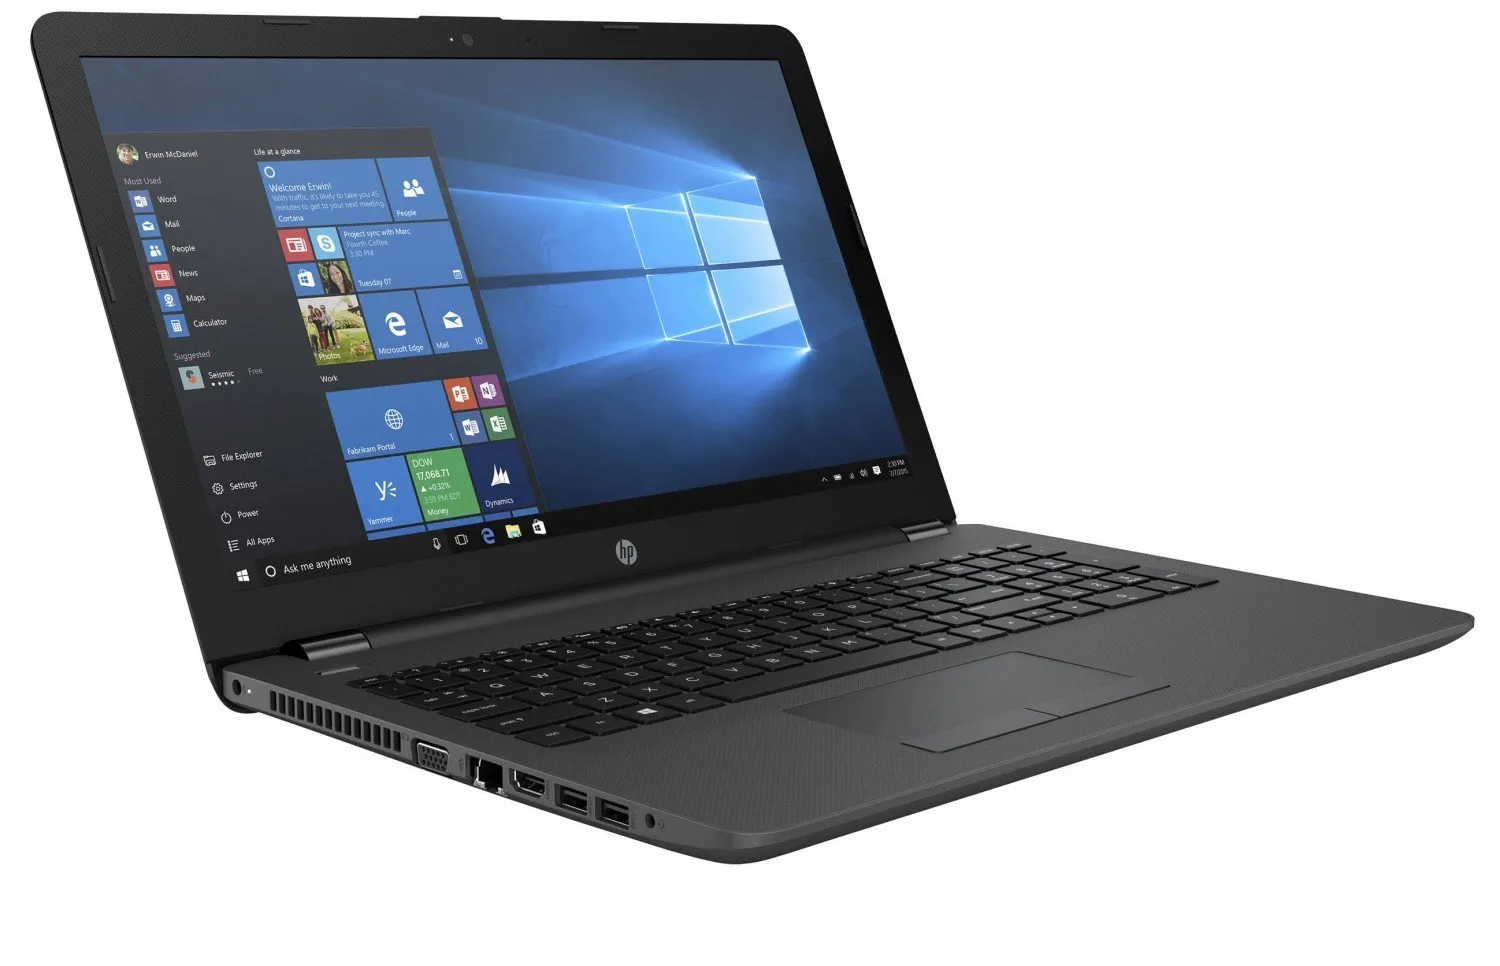 Ноутбук HP 250 G6 /Celeron 3060/4 GB DDR3/ 500GB HDD /15.6" HD LED/Intel HD Graphics 5500/ DVD / RUS#6